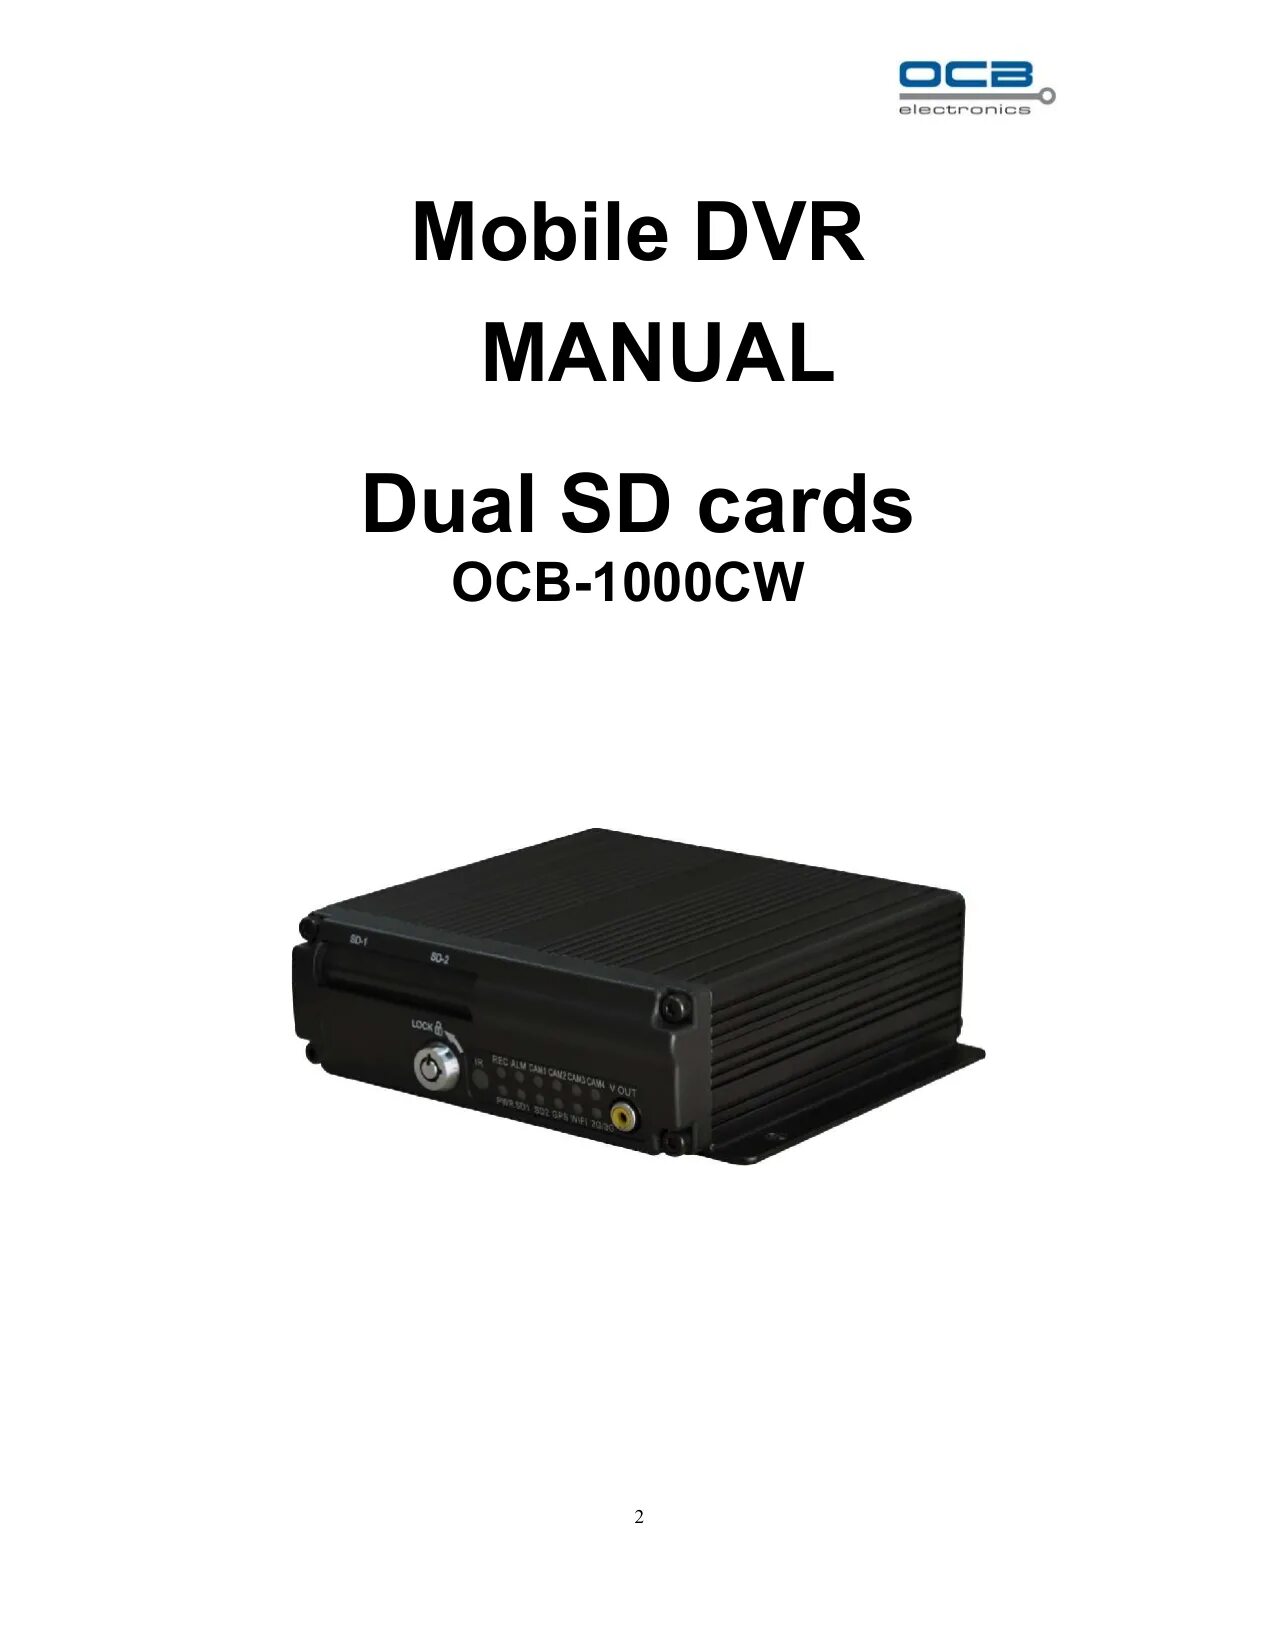 Mobile ch. Mobile DVR регистратор. DVR de-ah16e-w видеорегистратор. Mobile DVR инструкция. Мануал видеорегистратор.